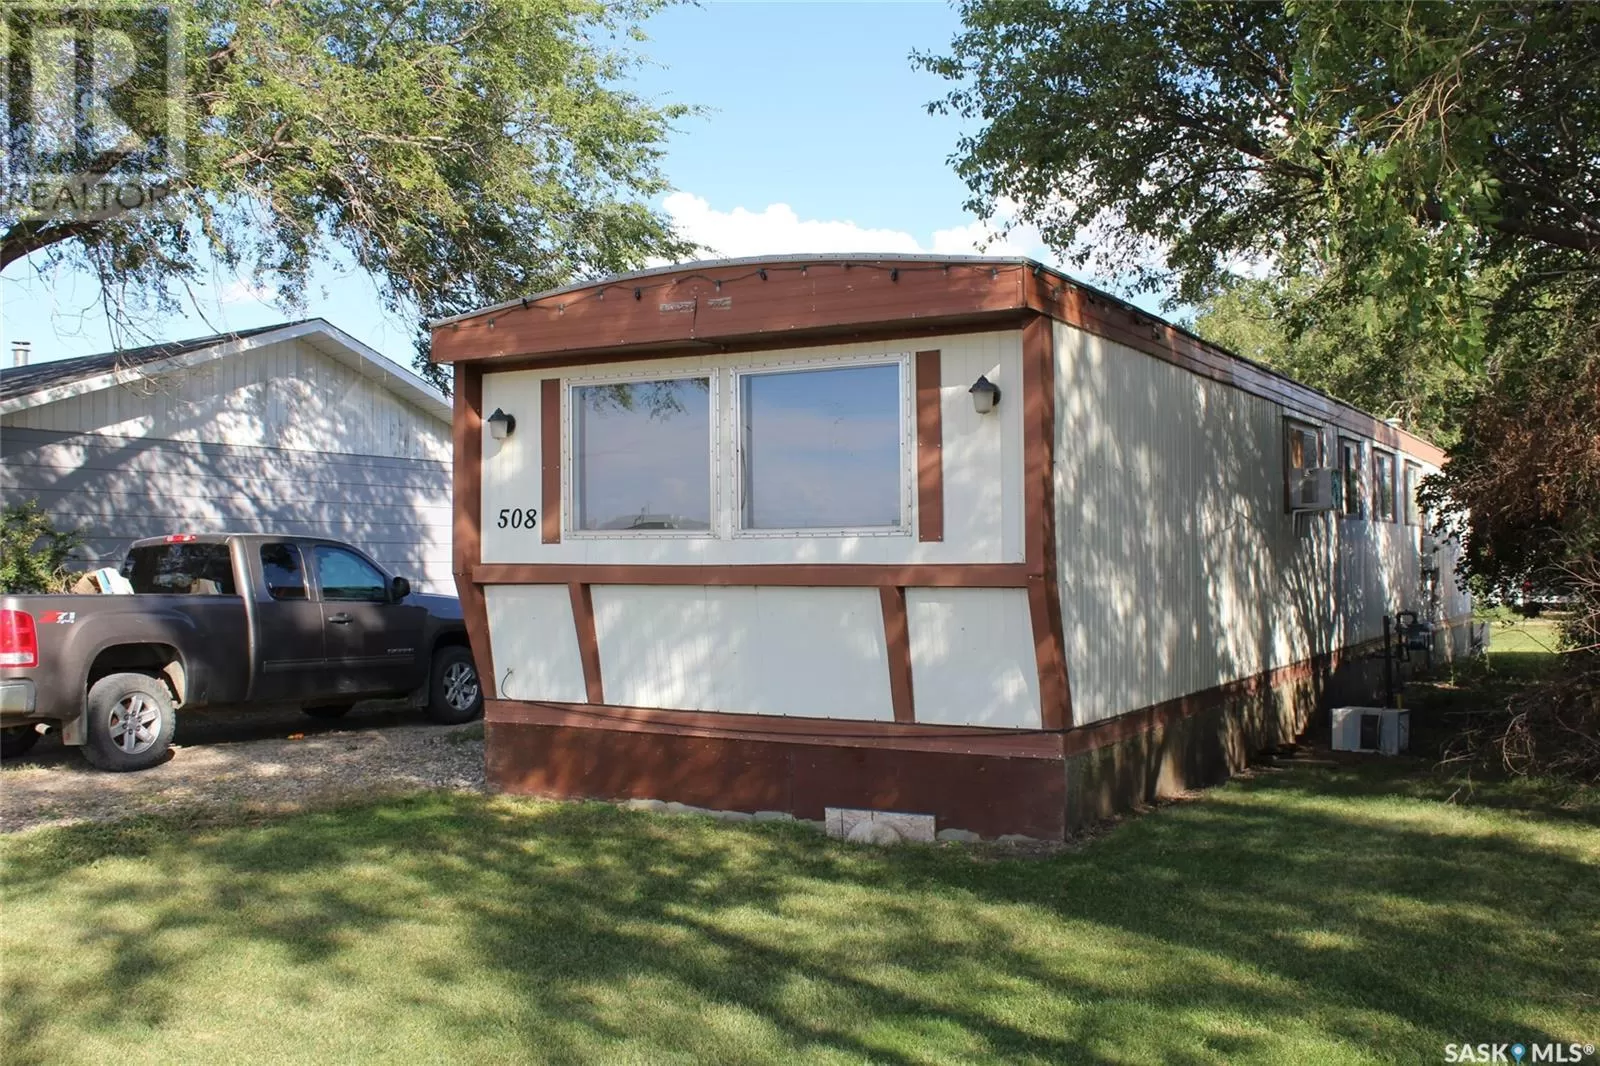 Mobile Home for rent: 508 Railway Avenue, Lampman, Saskatchewan S0C 1N0